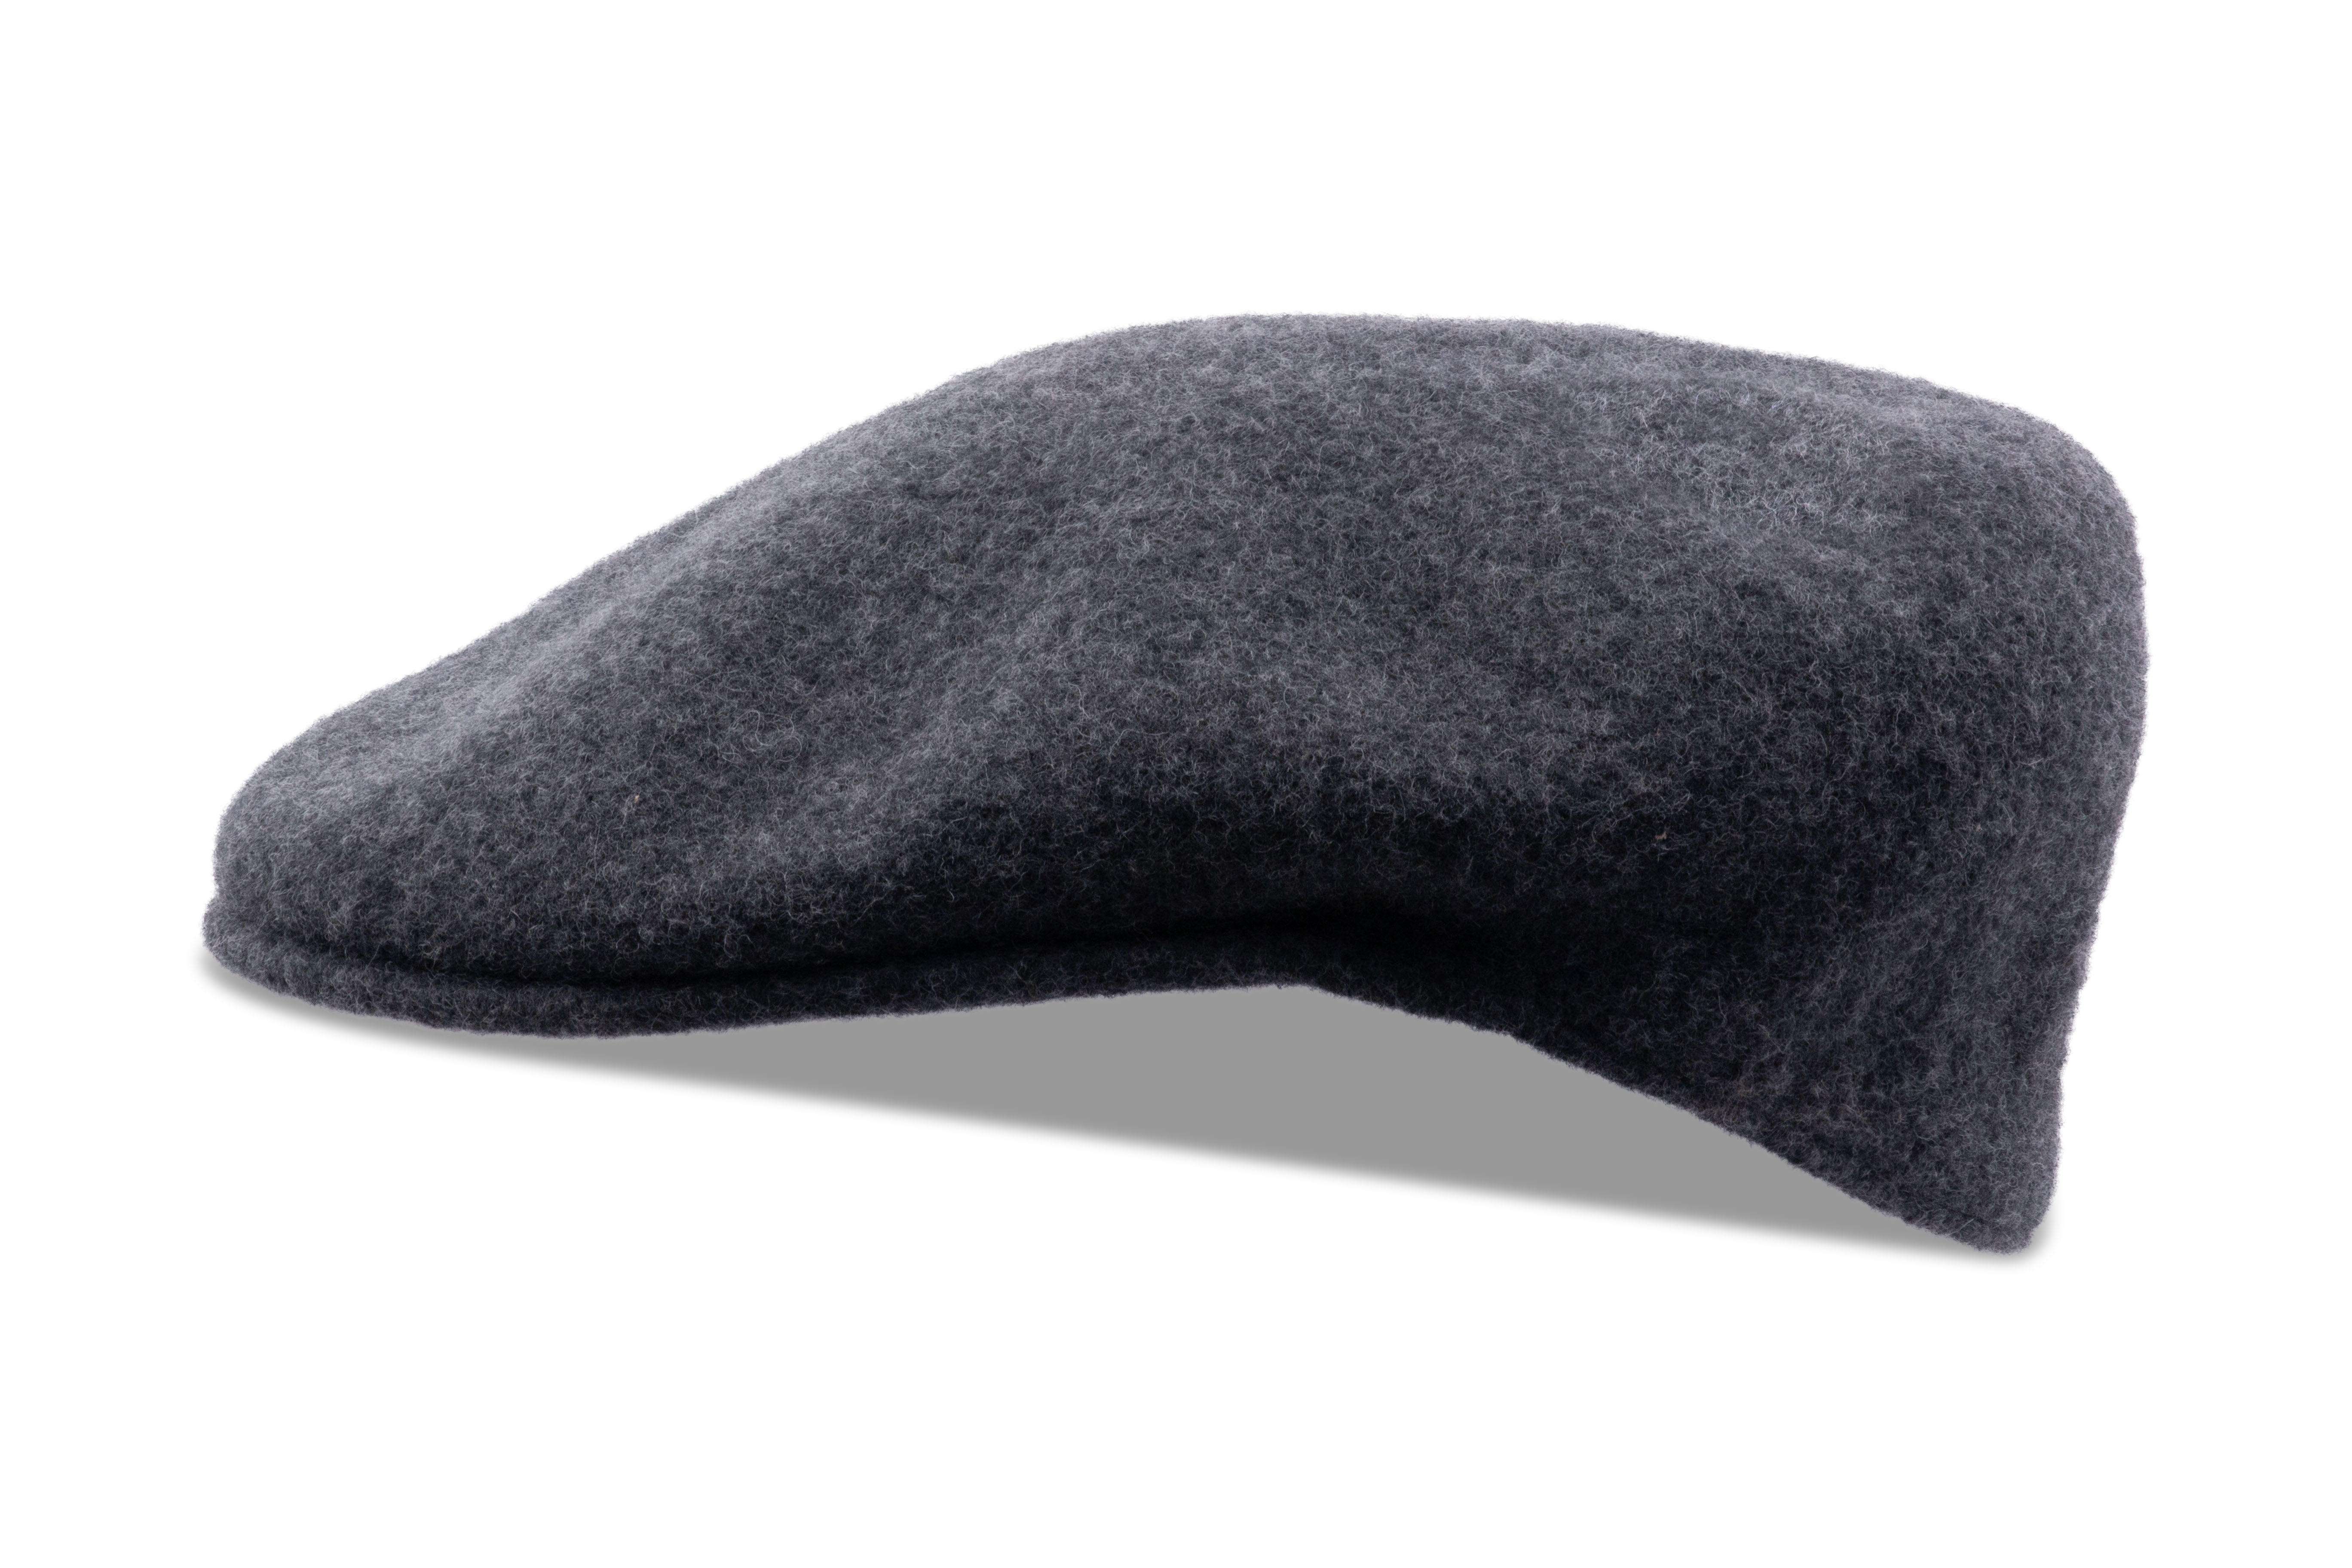 Kangol 504 Wool Felt Hat for Men and Women - Dark Flannel - S